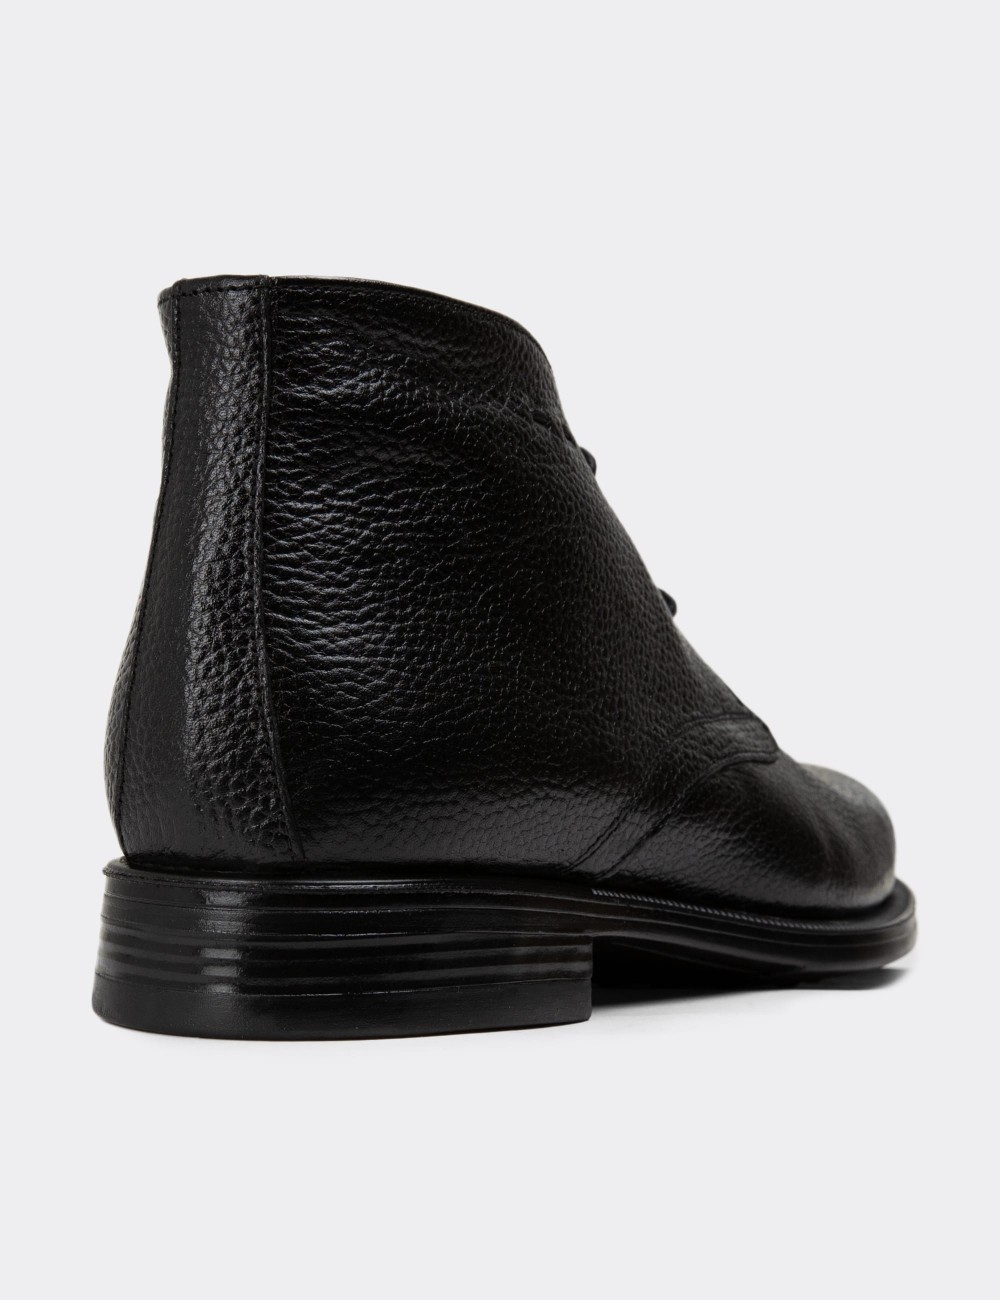 Black Leather Desert Boots - 01295MSYHC14